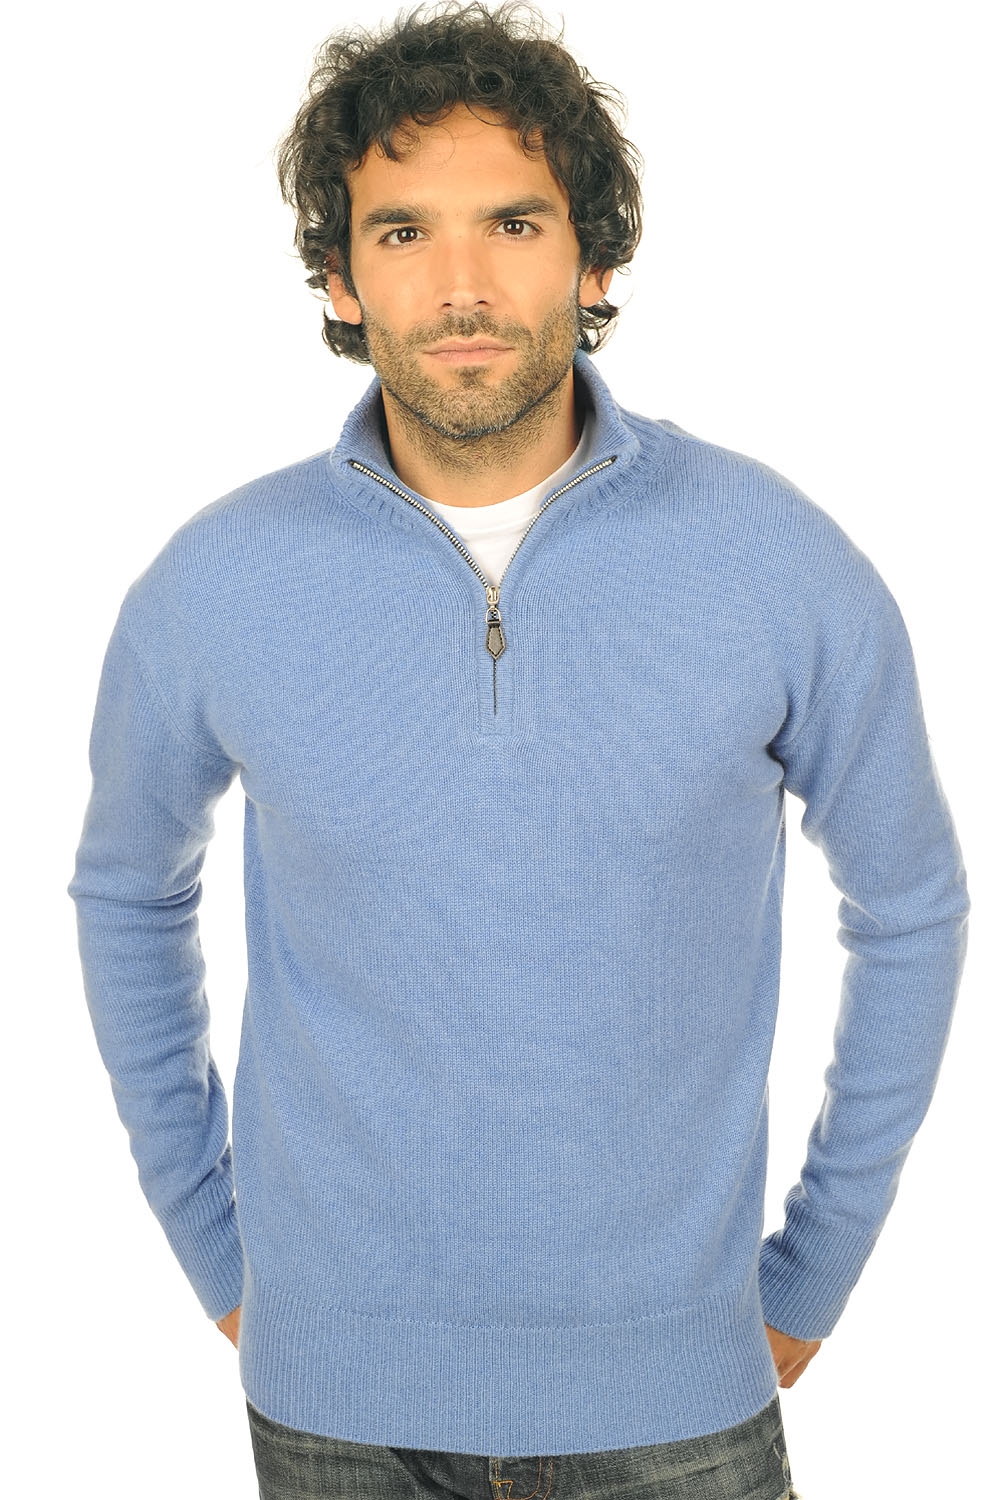 Cashmere men polo style sweaters donovan blue chine 3xl